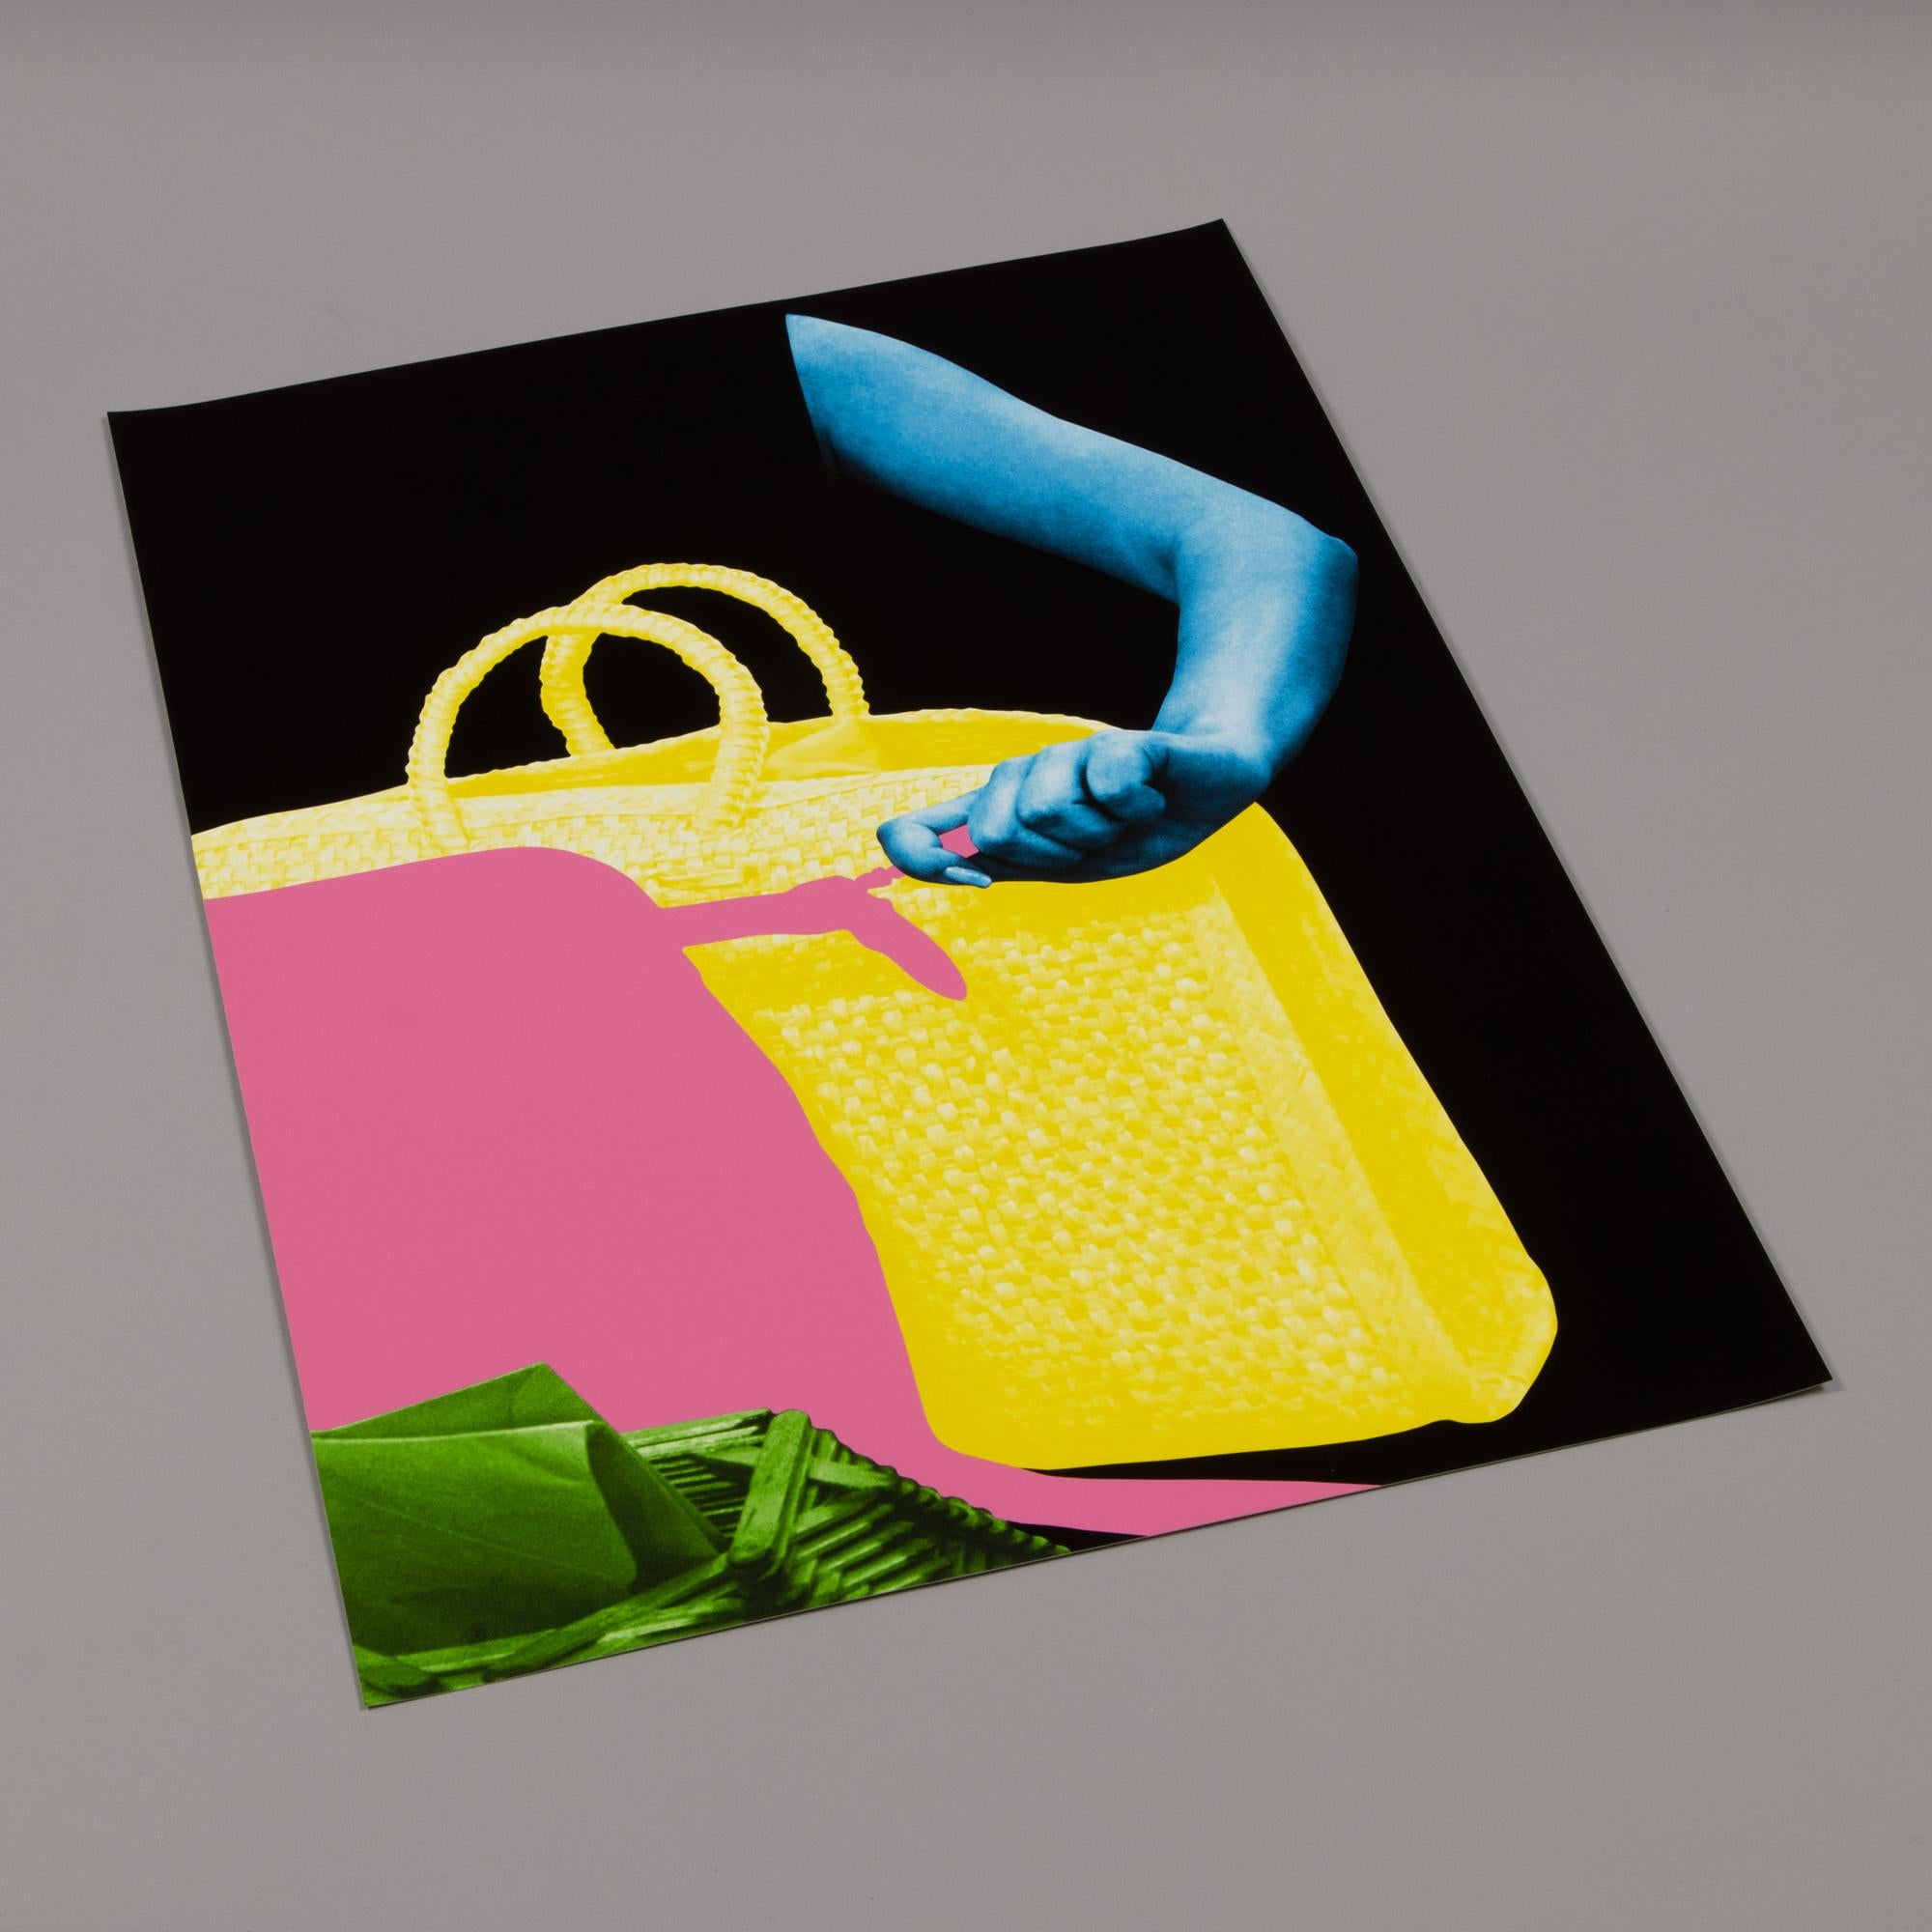 John Baldessari, Two Bags and Envelope Holder - Conceptual Art, Signed Print For Sale 3